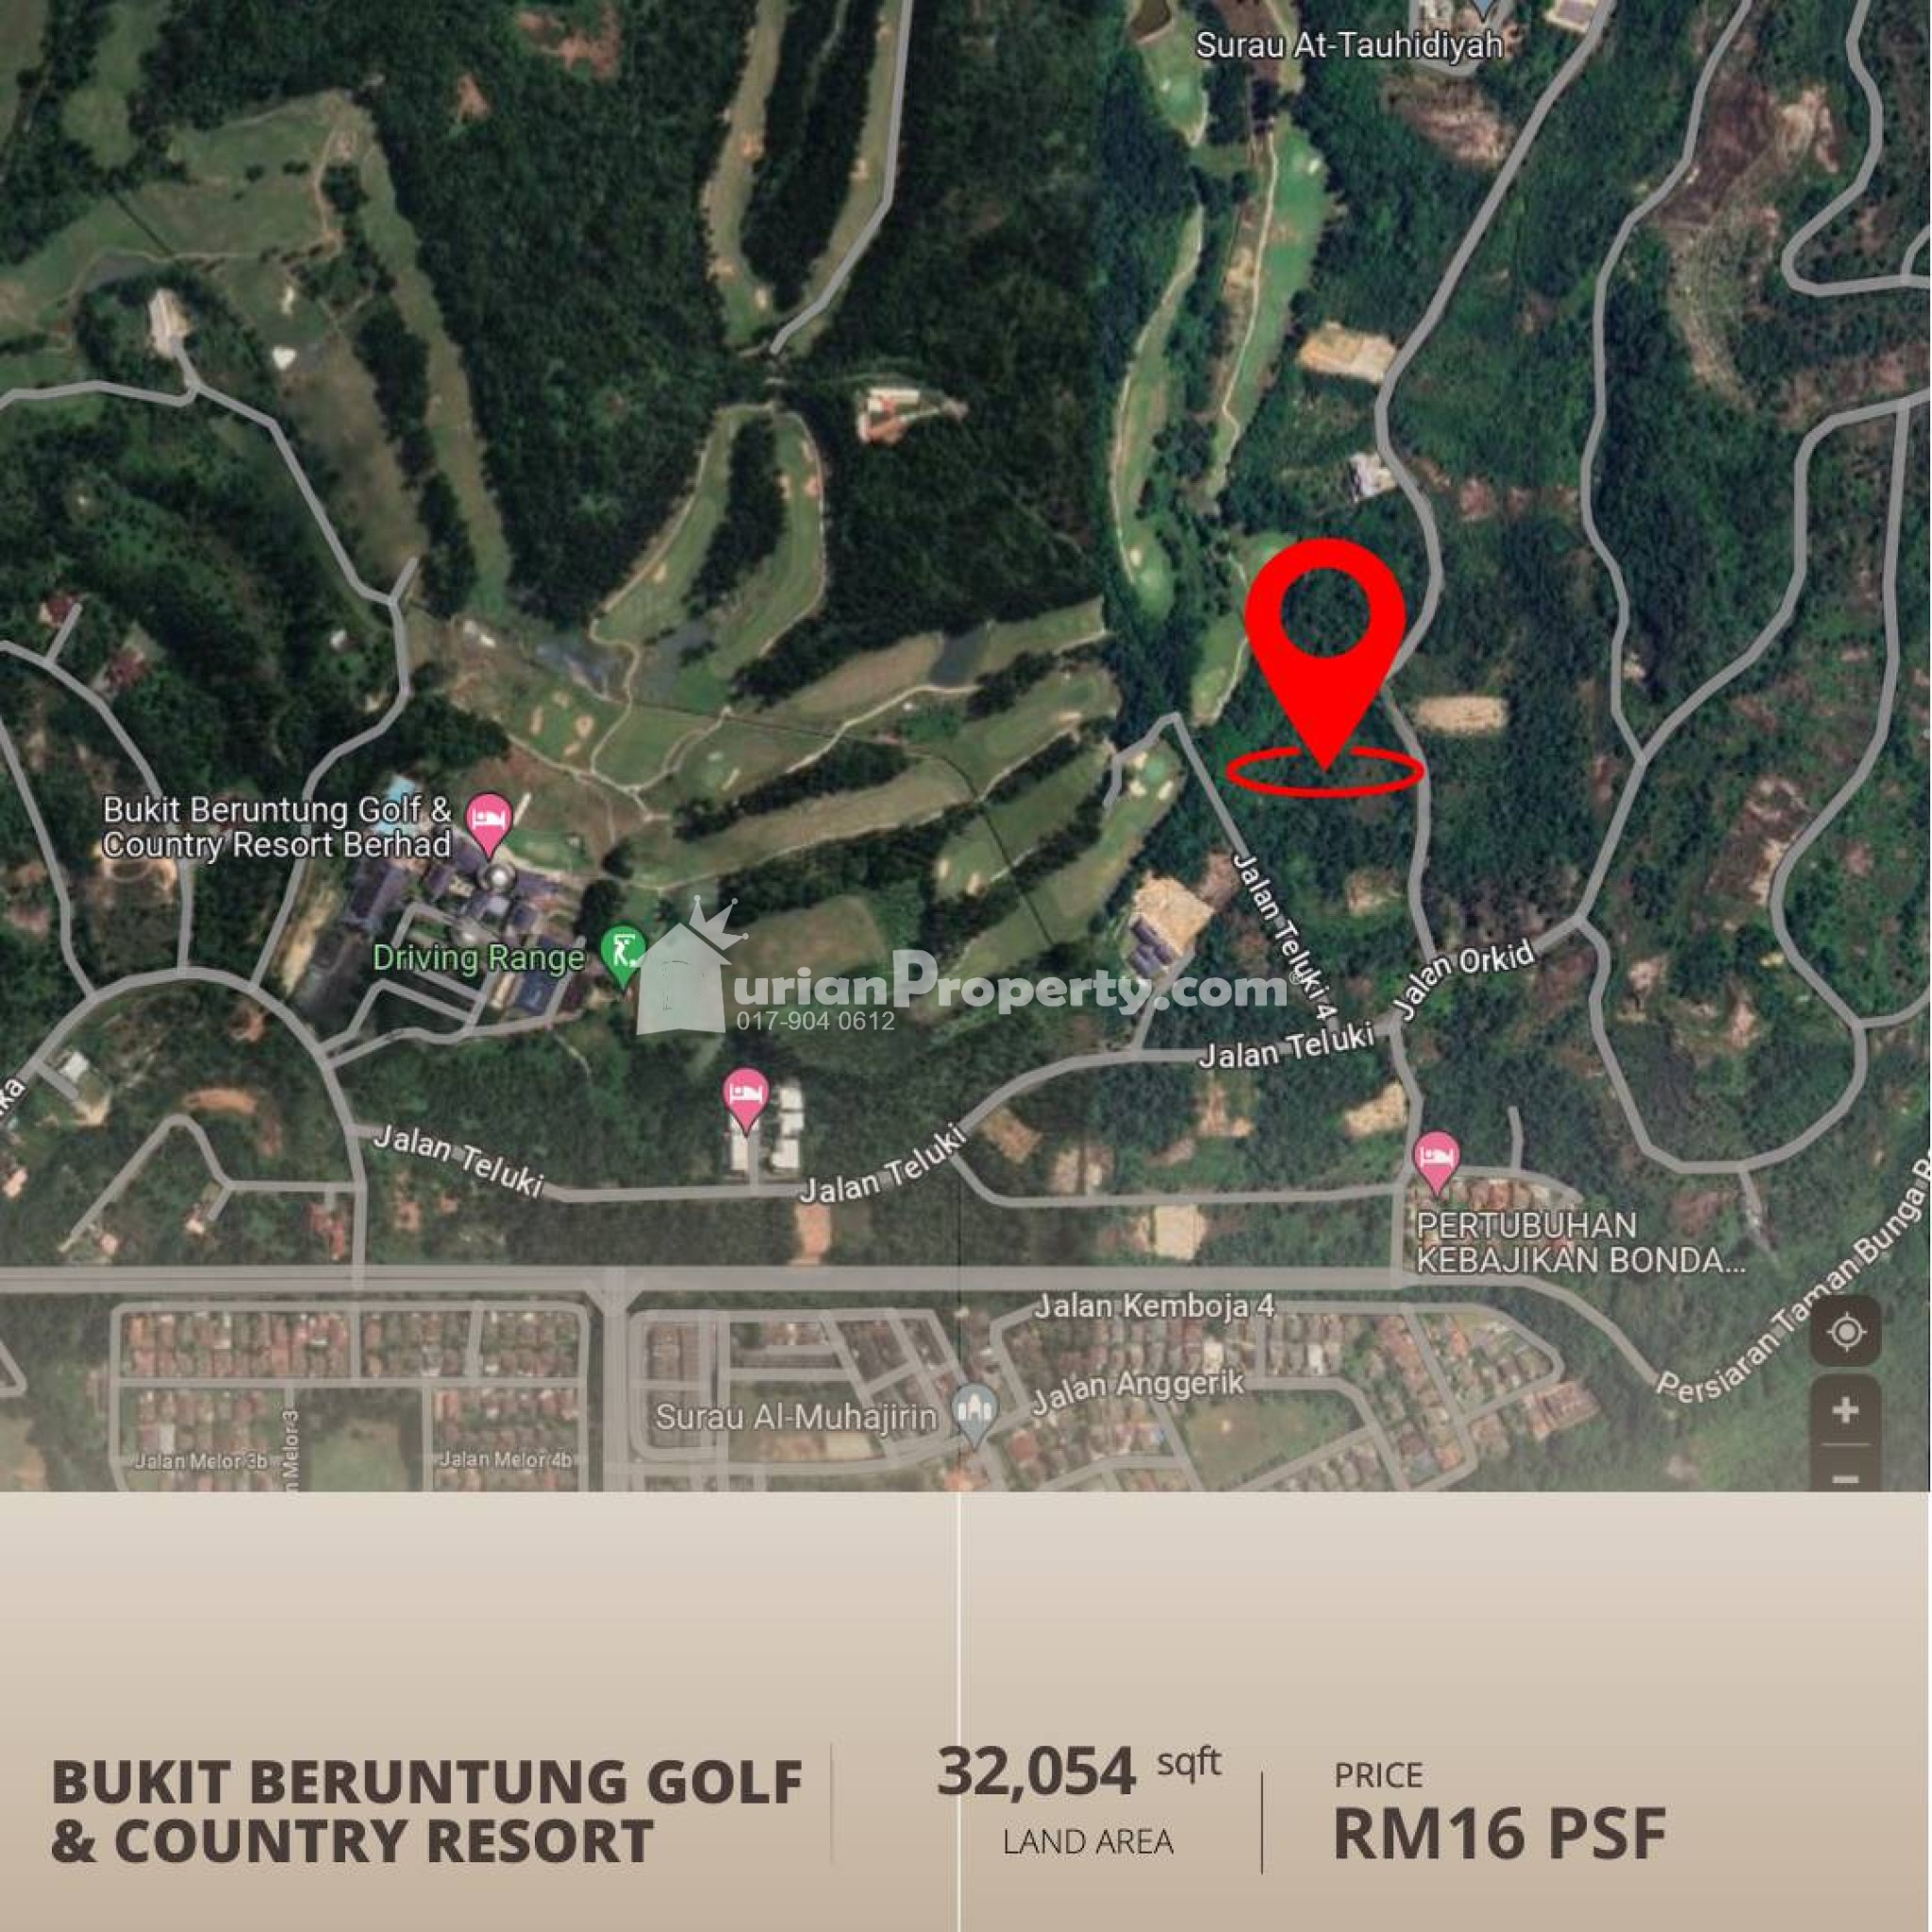 Residential Land For Sale at Bukit Beruntung